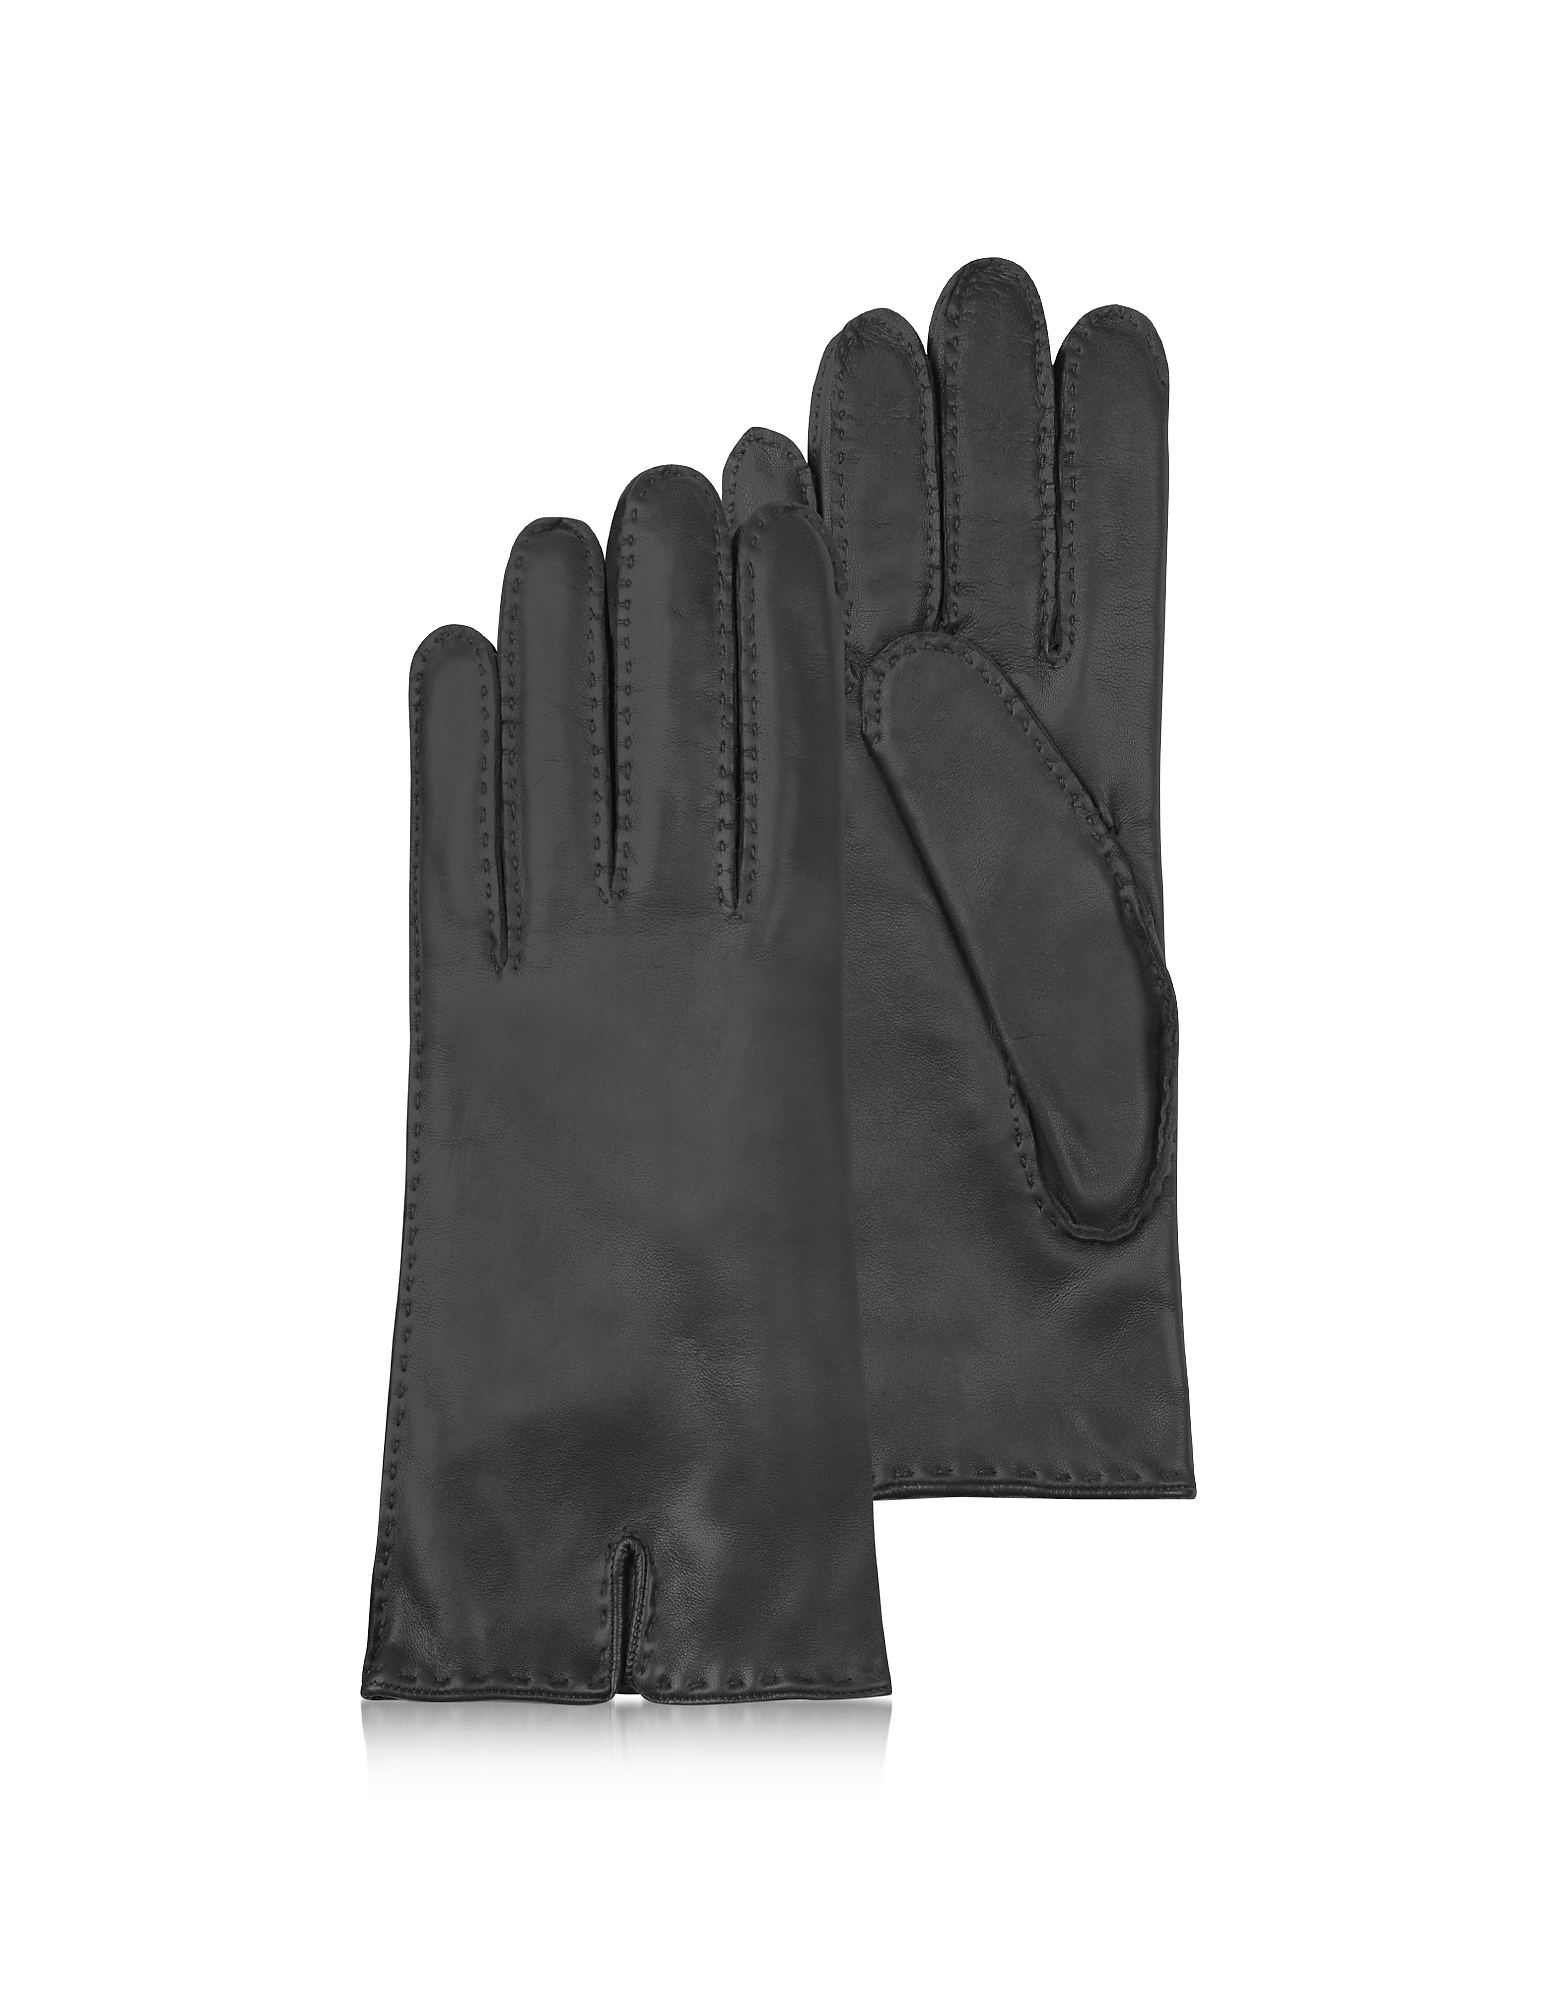 Forzieri Women's Gloves Women's Cashmere Lined Black Italian Leather Gloves